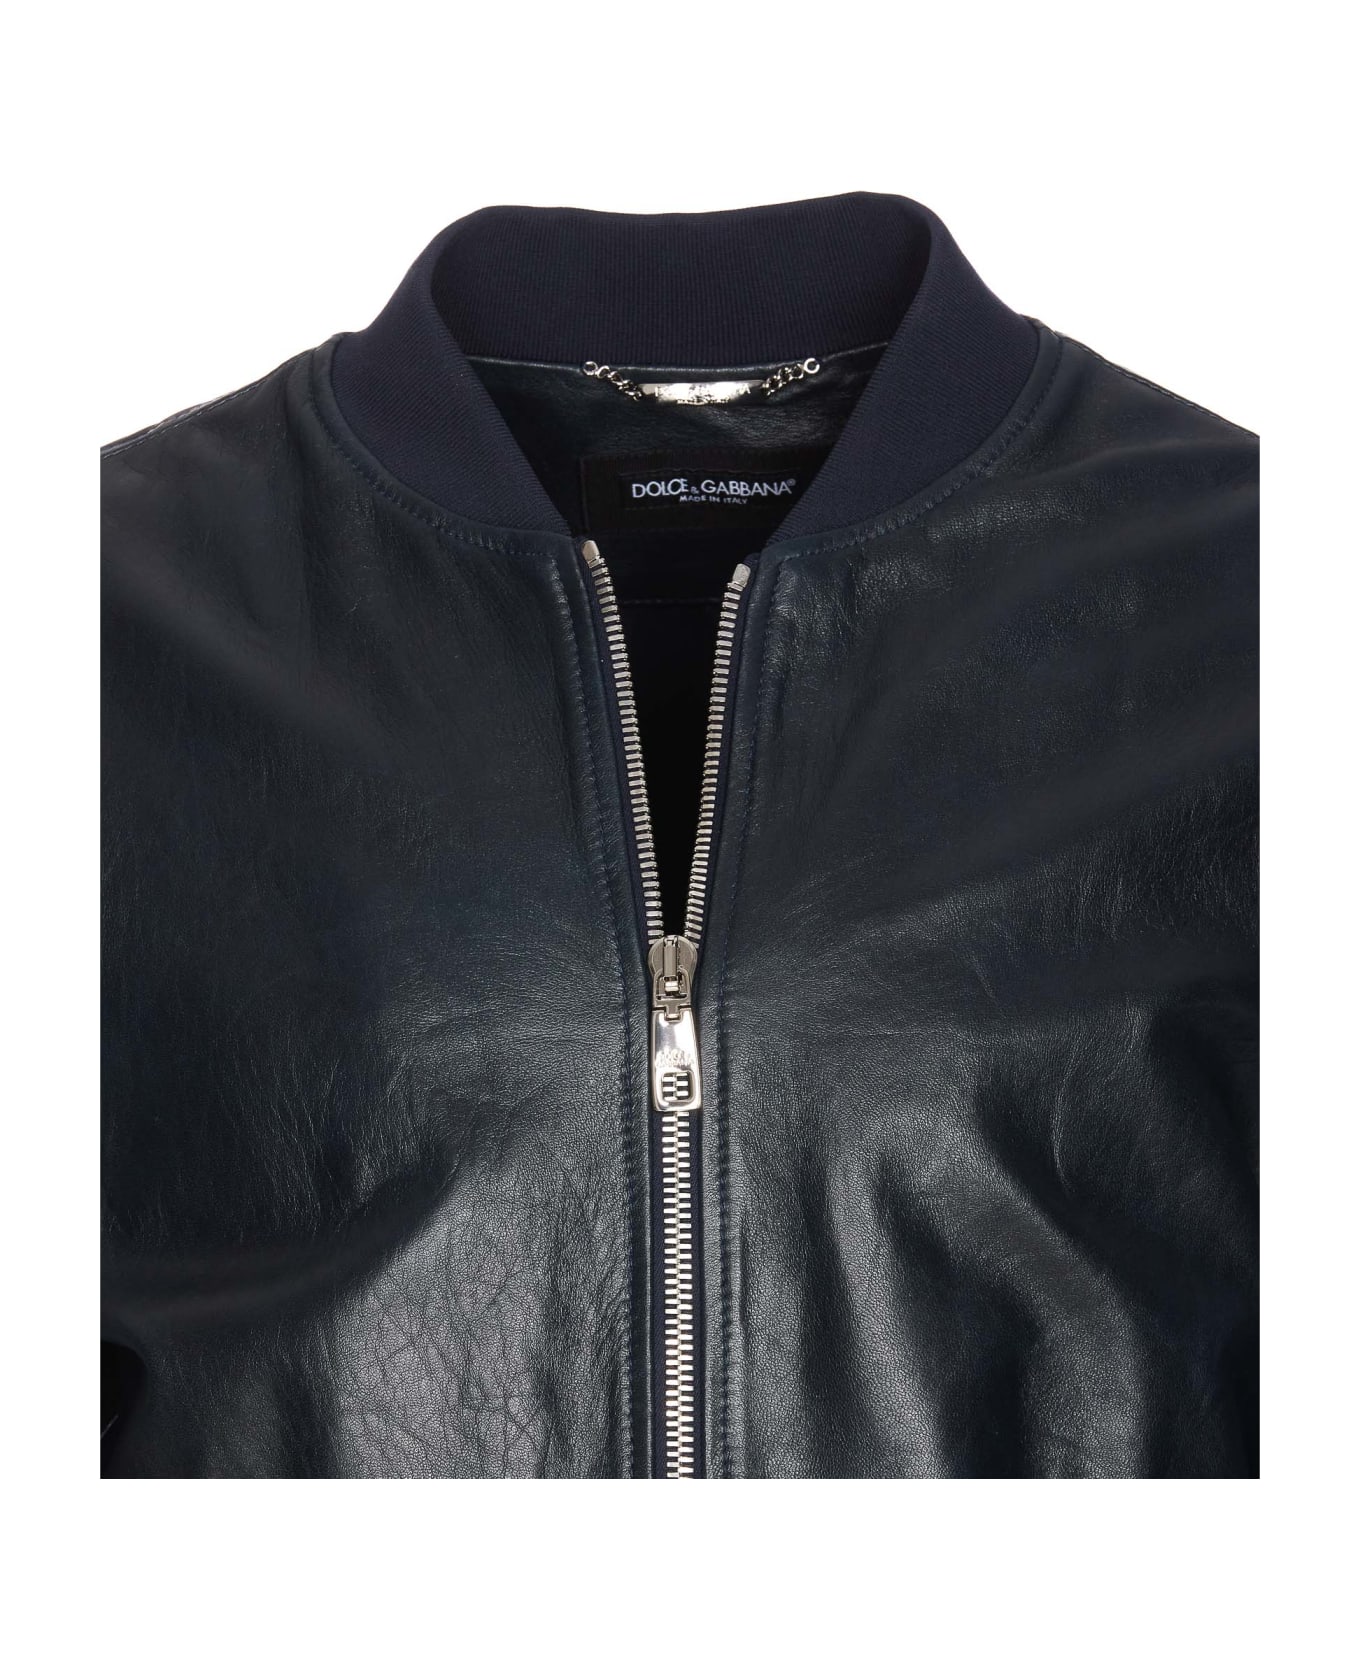 Dolce & Gabbana Navy Lambskin Jacket - BLUE レザージャケット